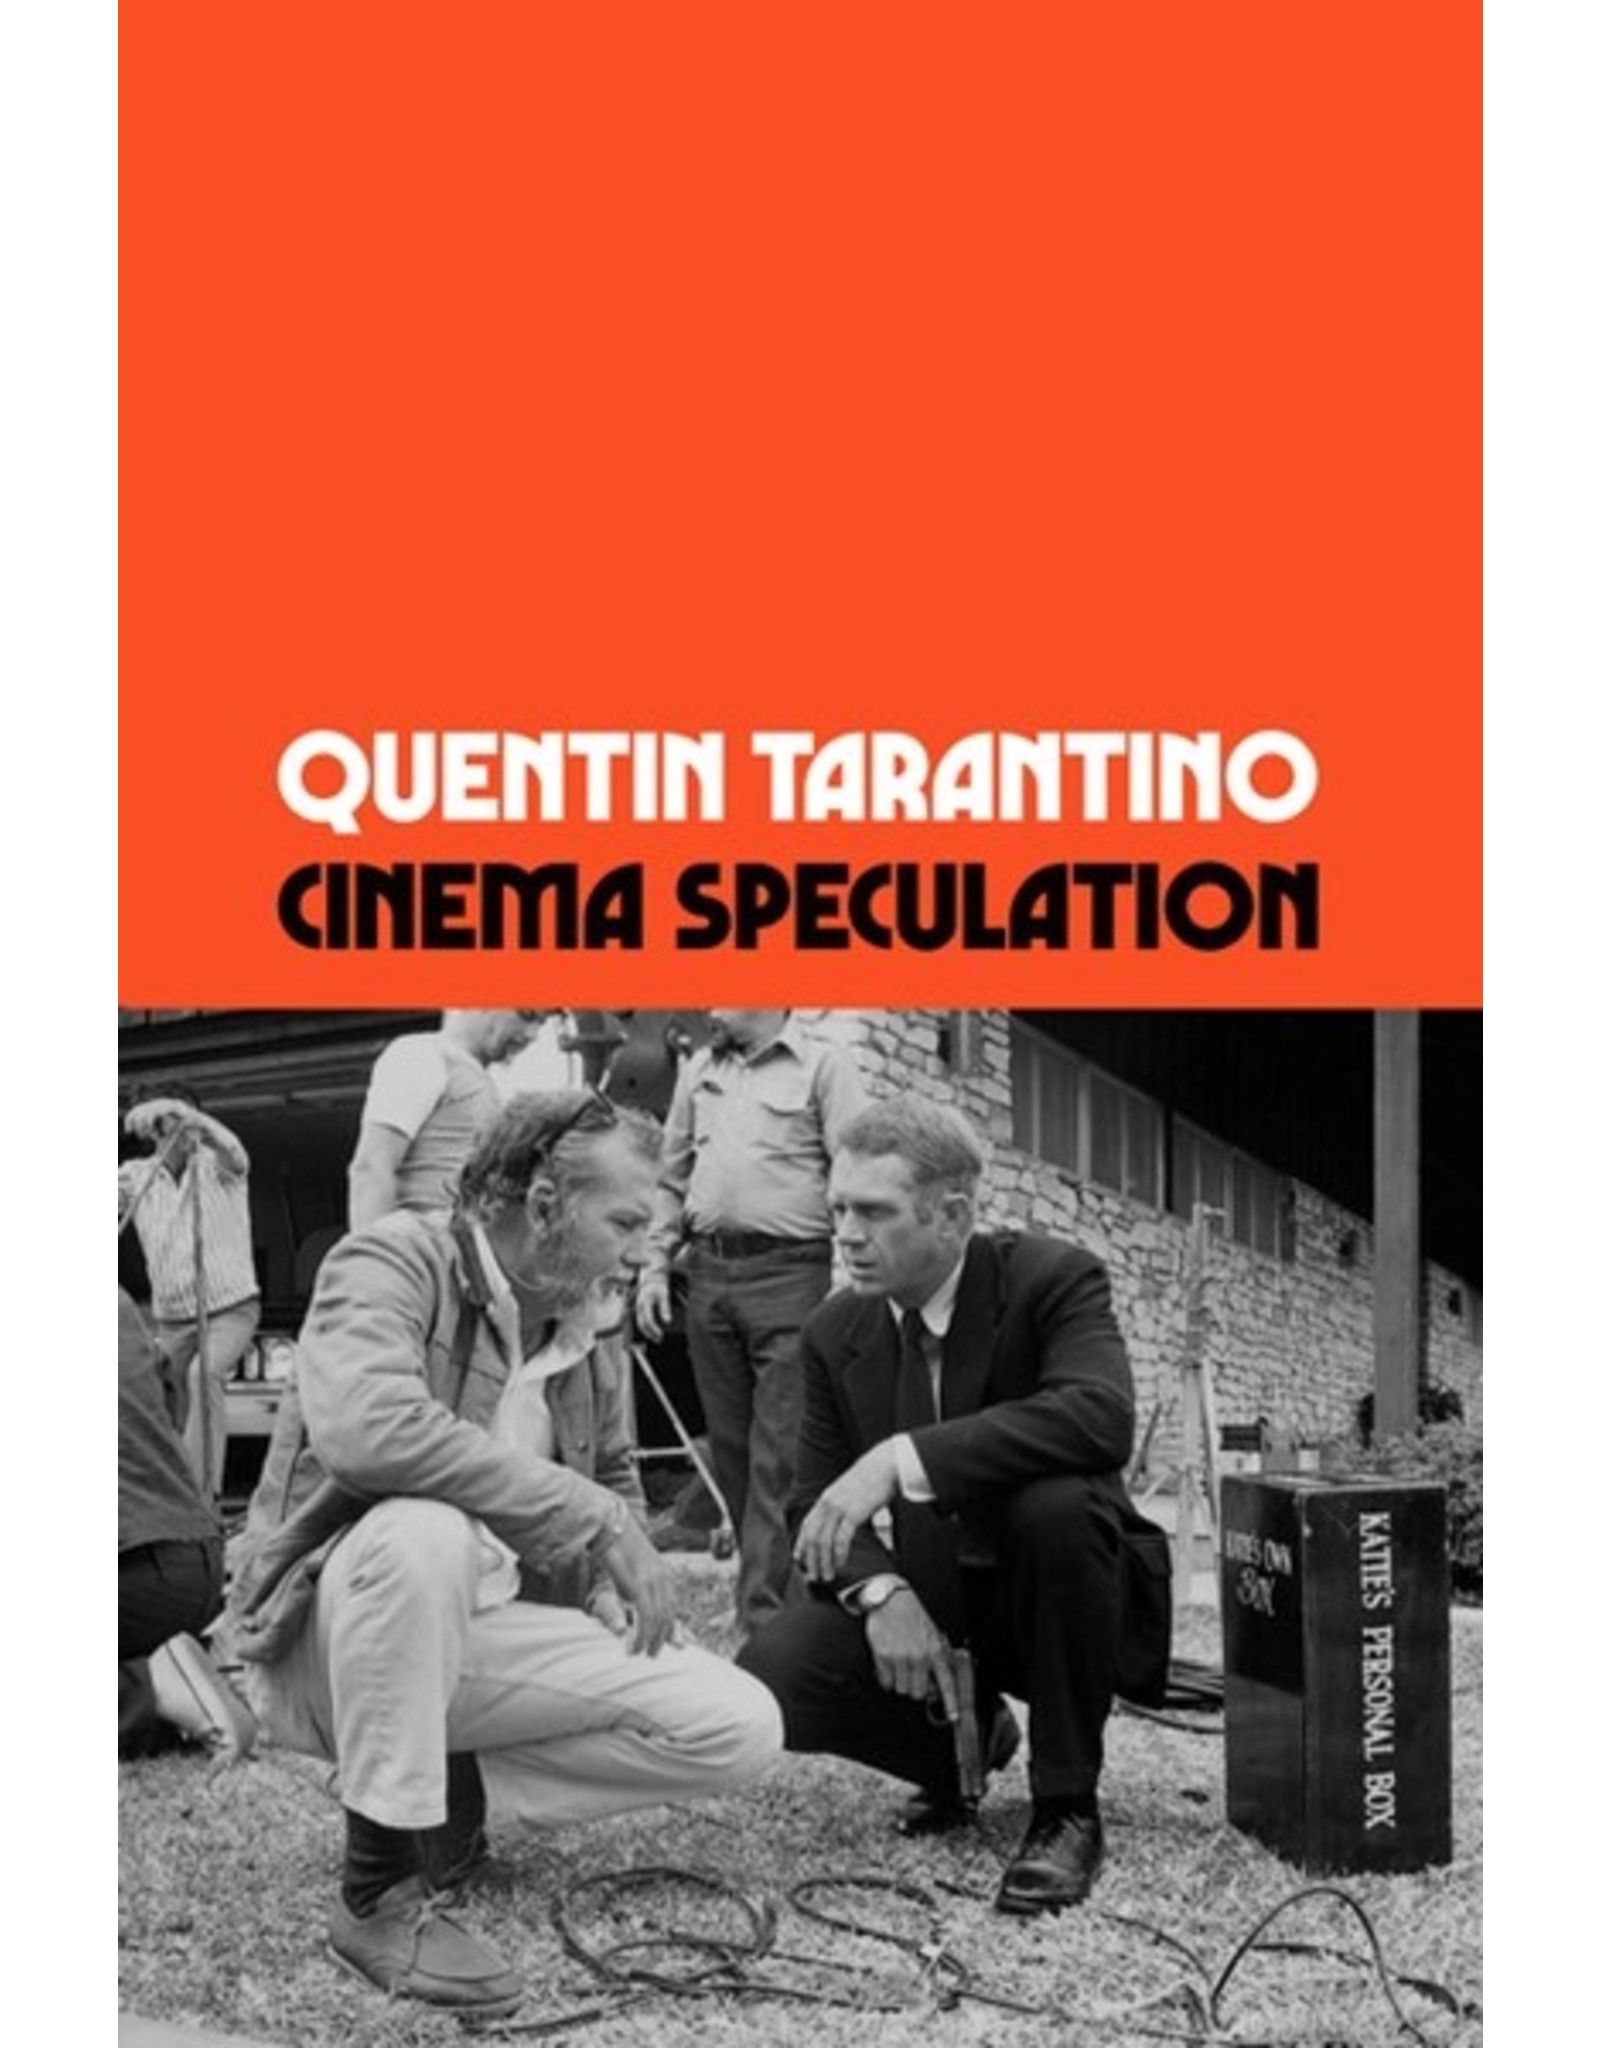 Cinema Speculation by Quentin Tarantino